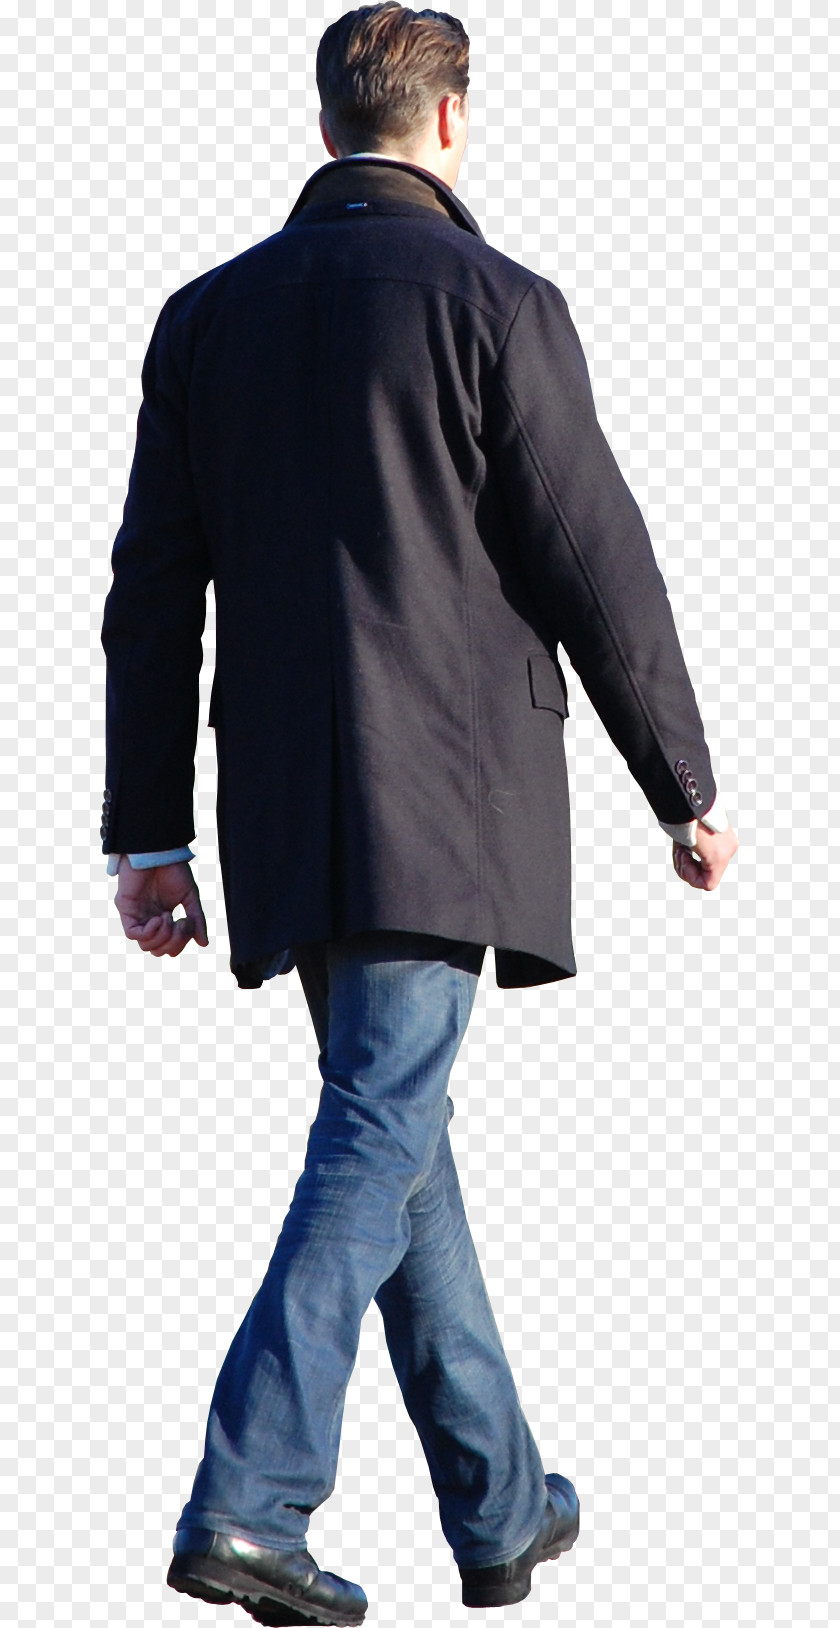 Man Walking Coat Jacket Clothing Outerwear Fashion PNG